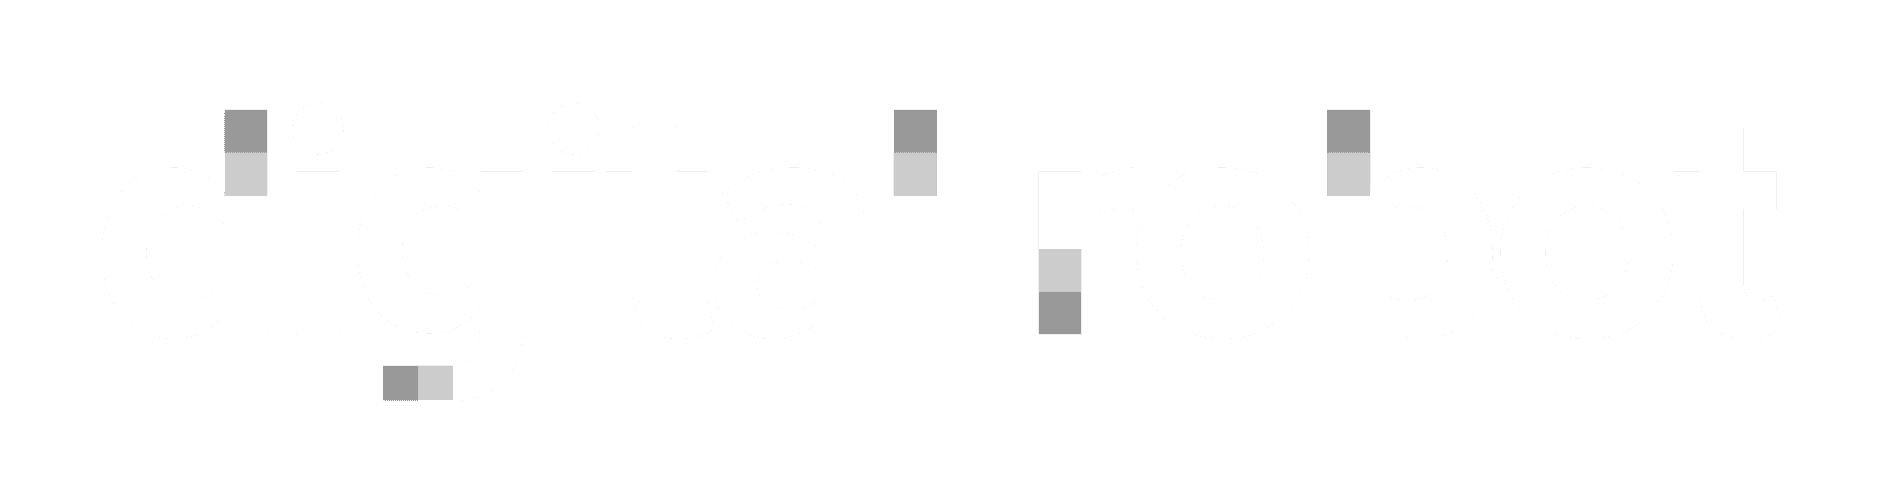 Digital Robot Logo